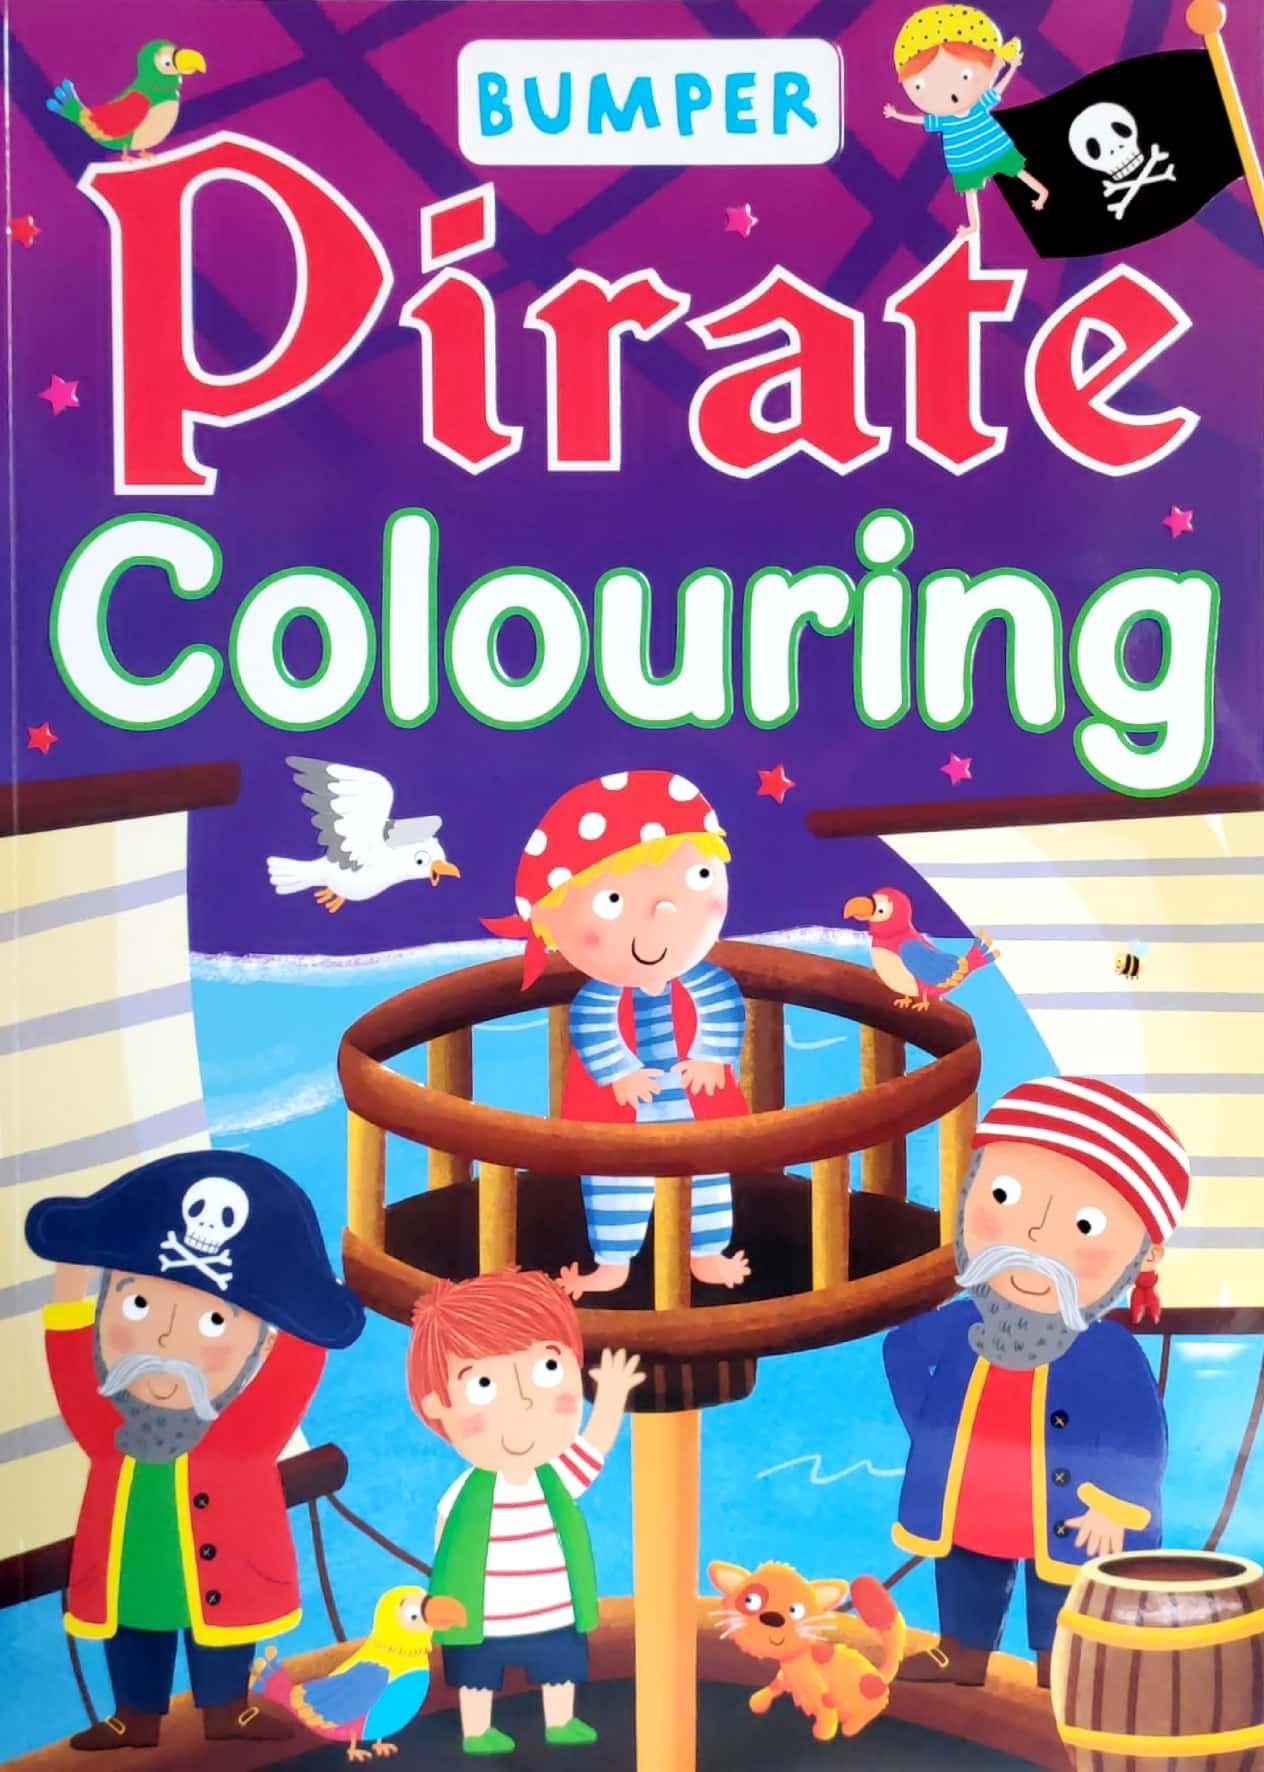 Bumper Pirate Colouring